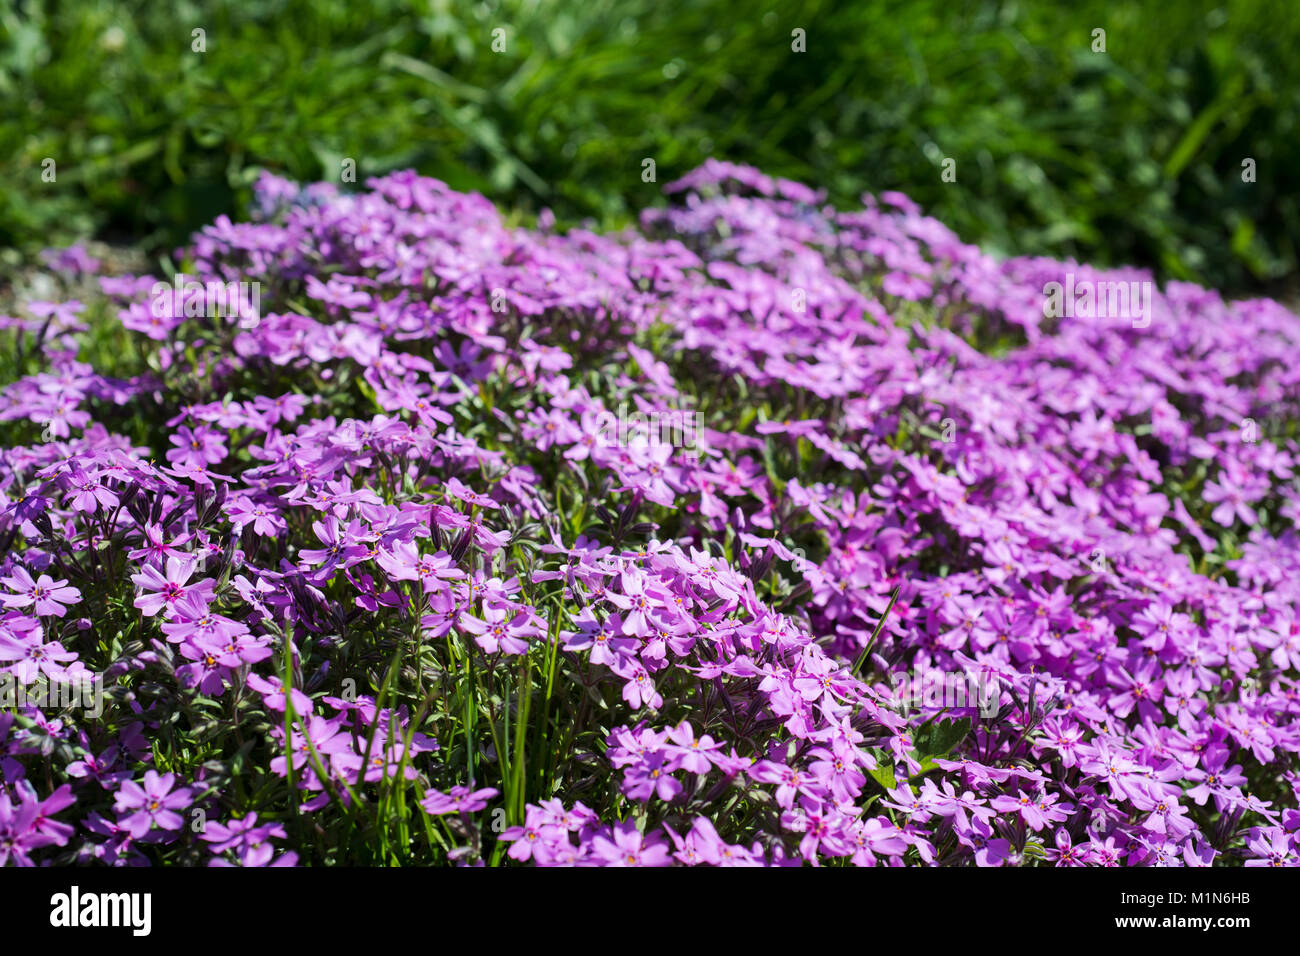 Flowers Phlox subulata. Soft focus Stock Photo